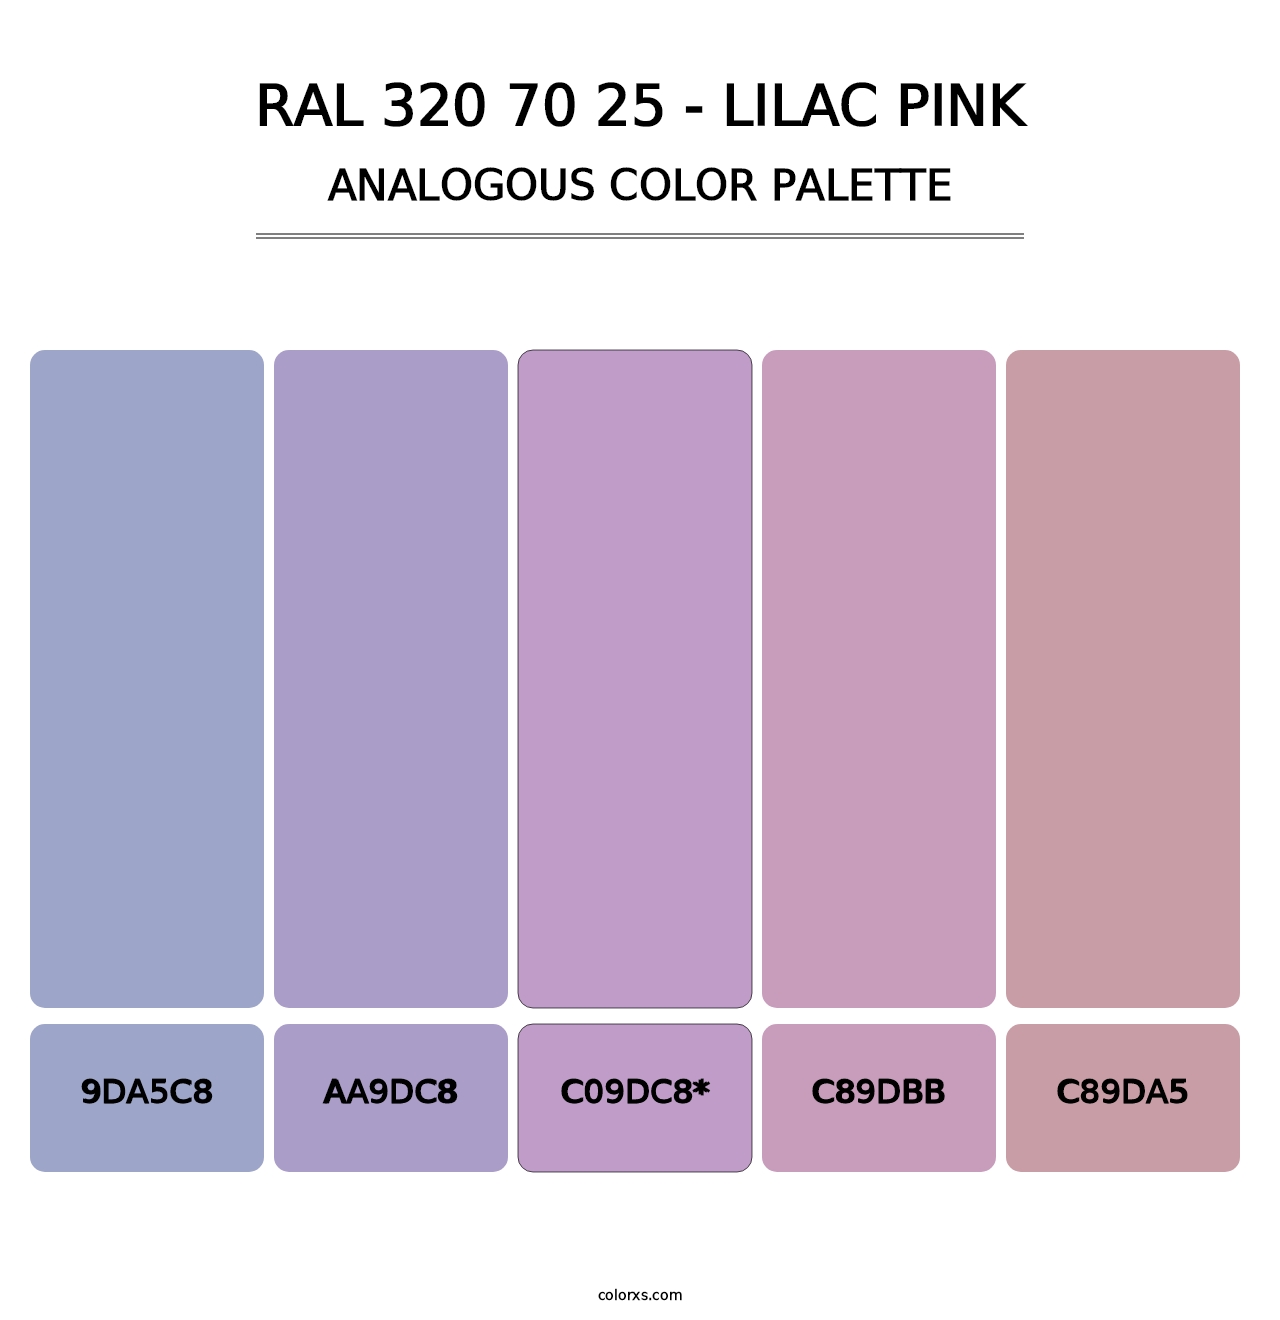 RAL 320 70 25 - Lilac Pink - Analogous Color Palette